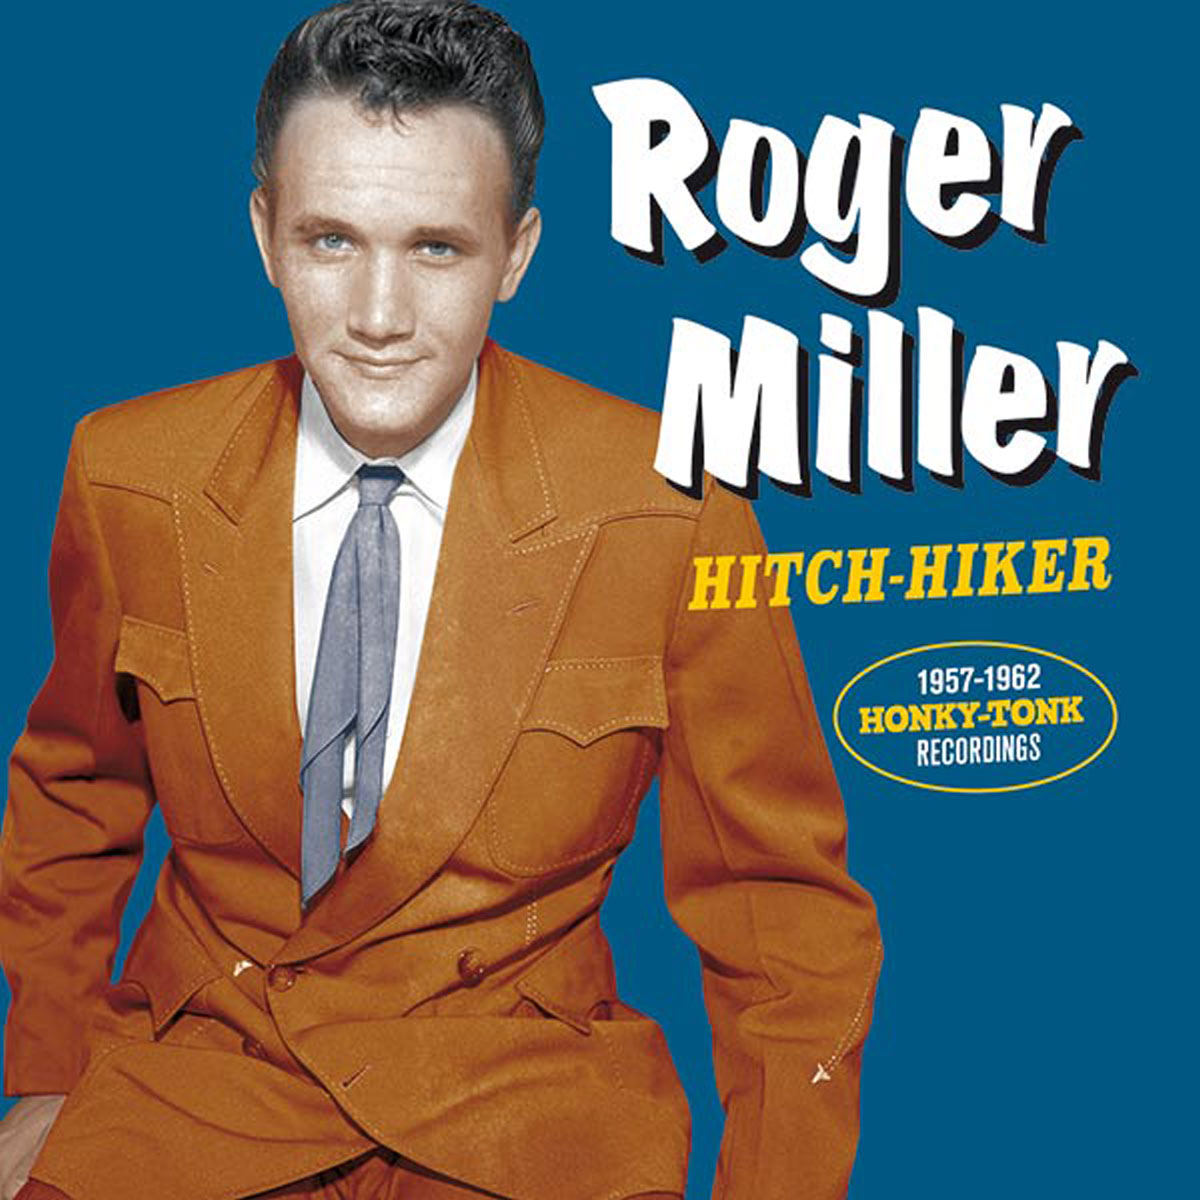 Hitch-Hiker - 1957 - 1962 Honky-Tonk Recordings